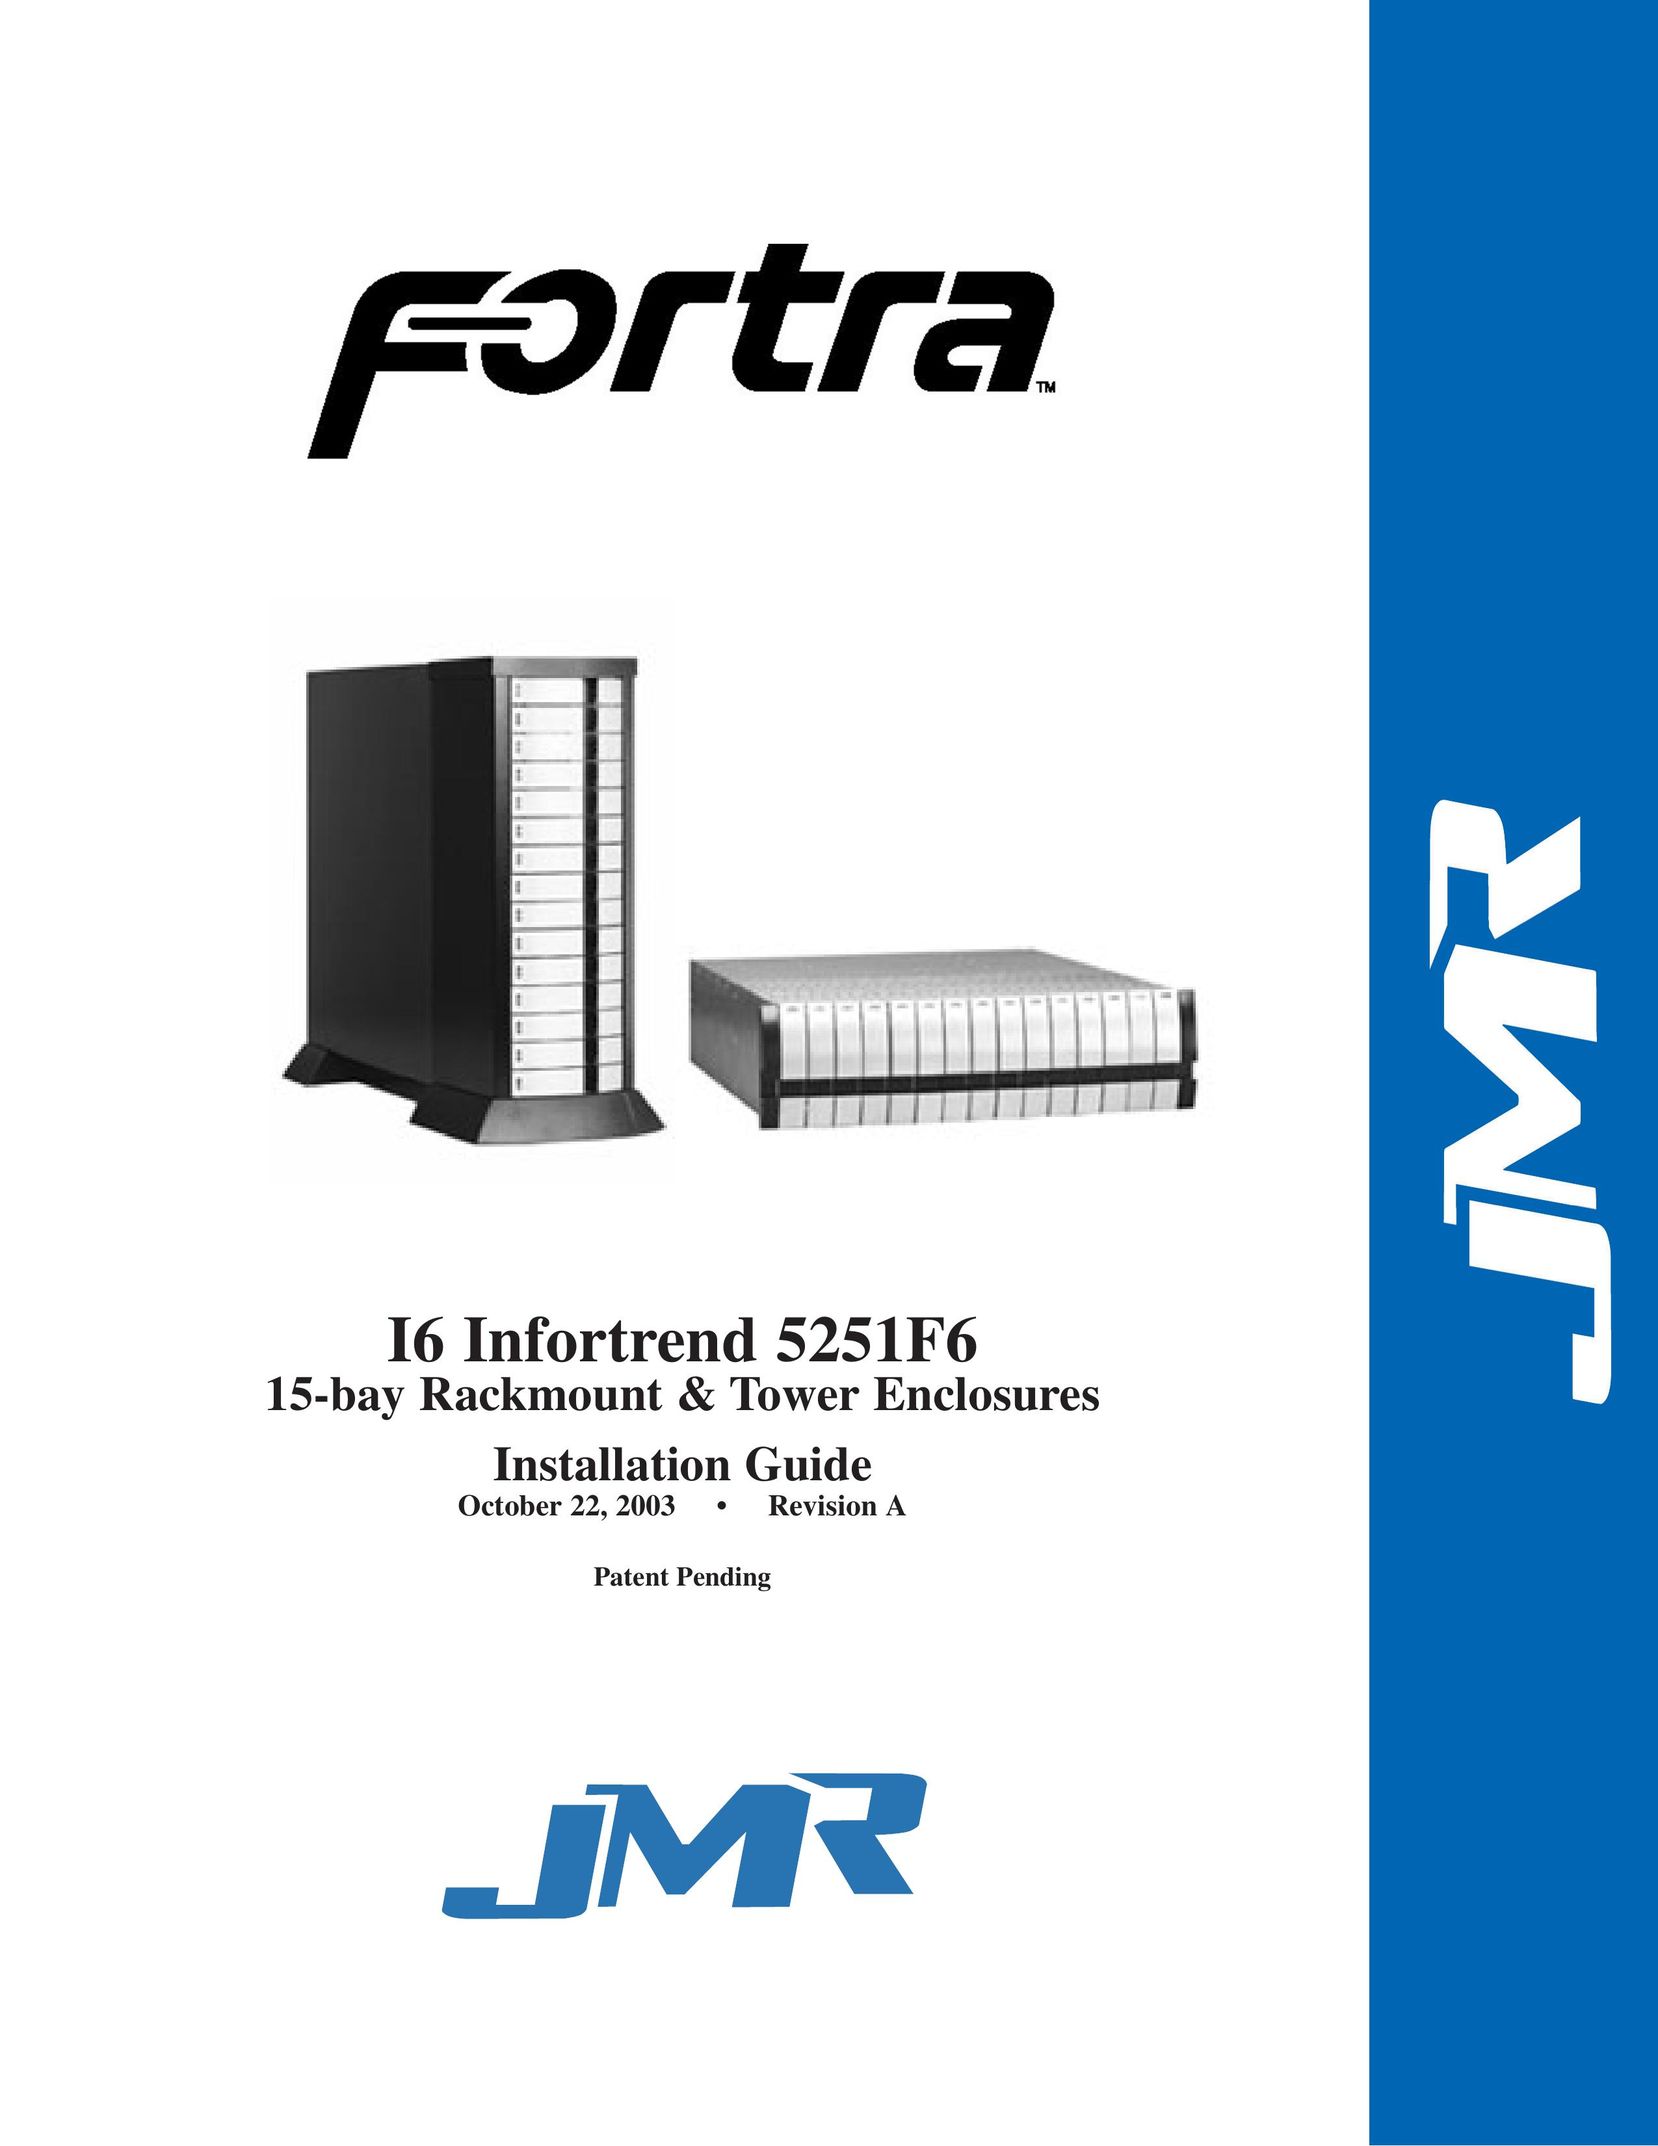 JMR electronic 5251F6 Indoor Furnishings User Manual